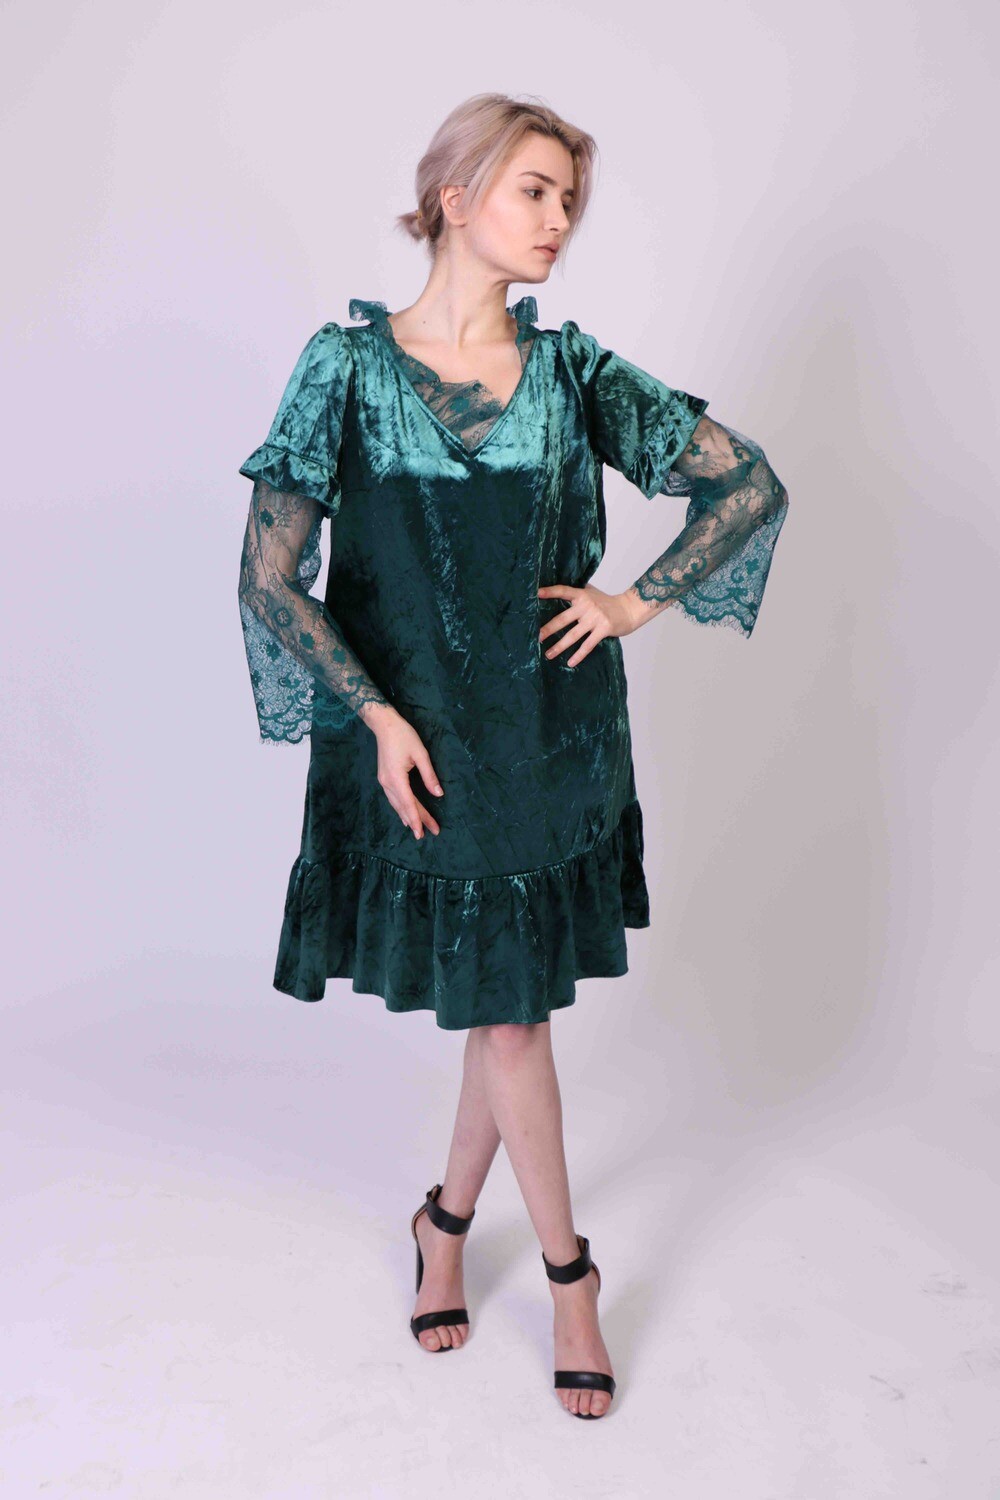 Beautiful Female Model Wearing Emerald Green Stock Photo 1400366855 |  Shutterstock